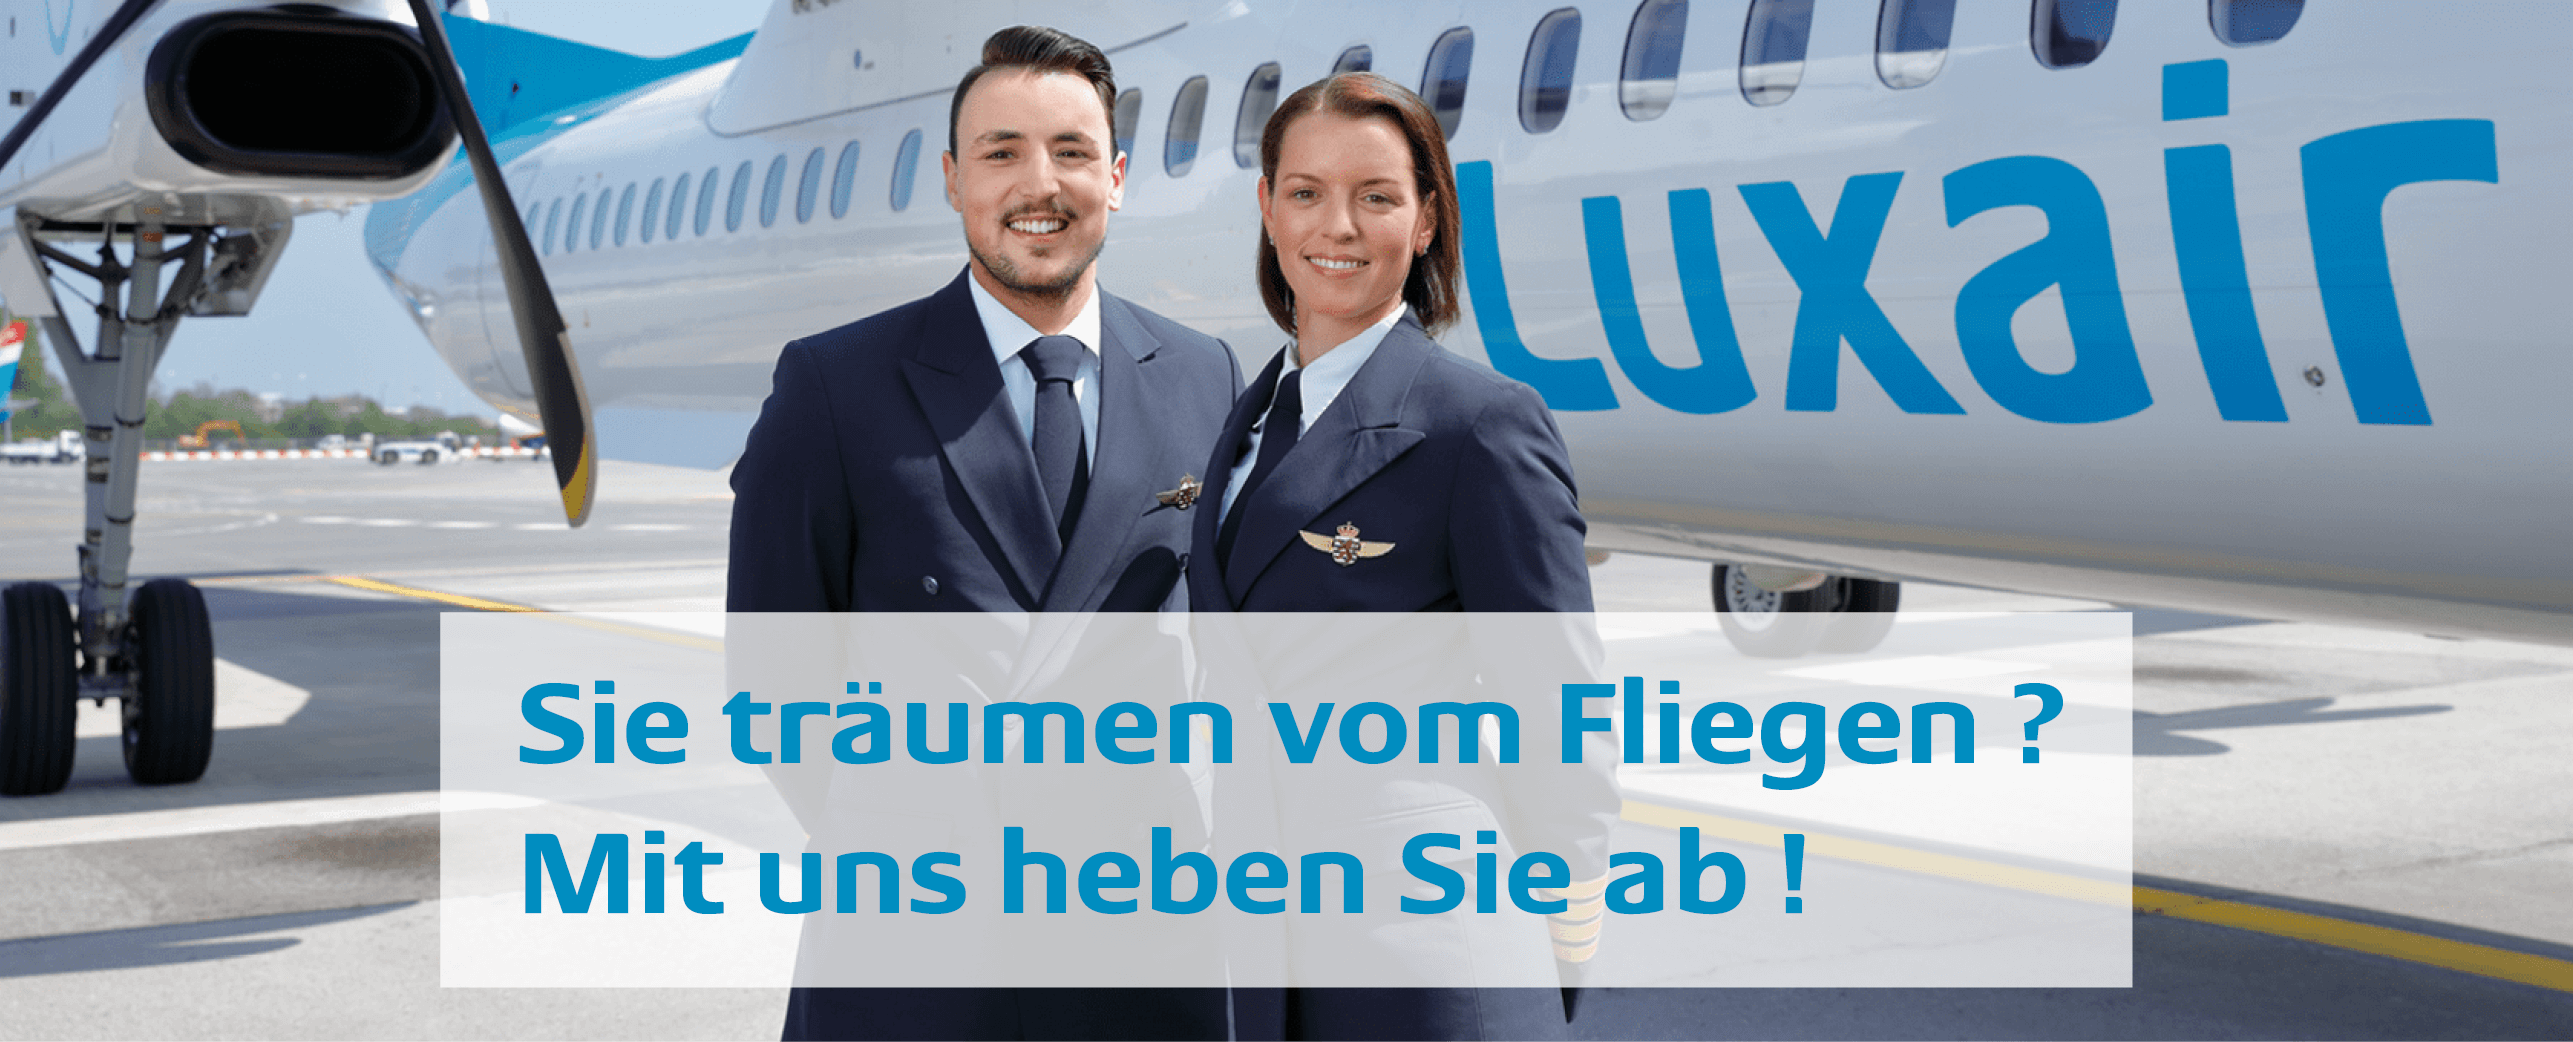 Dating-Website für Piloten der Fluggesellschaft